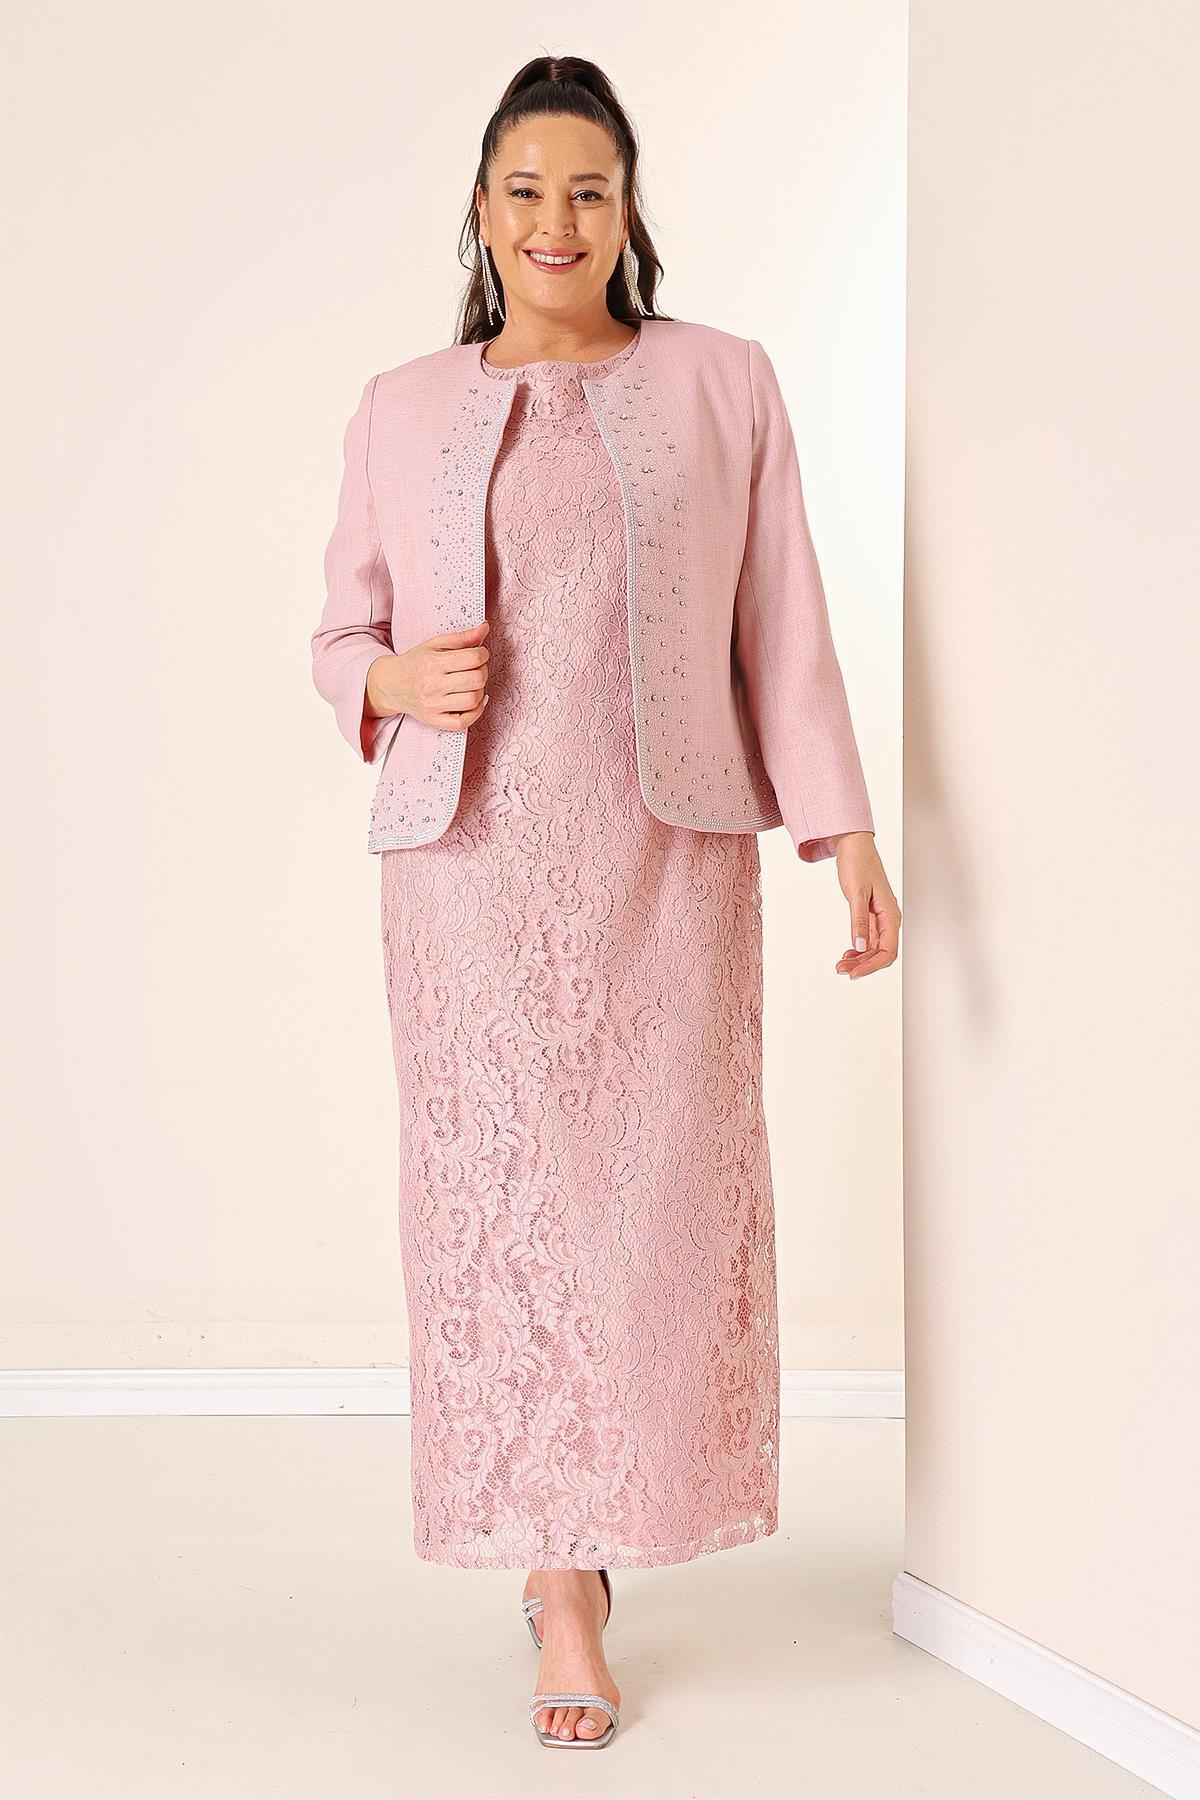 Levně By Saygı Sleeveless Floral Lace Long Dress Stone Detailed Crepe Jacket Lined Plus Size 2-Piece Suit